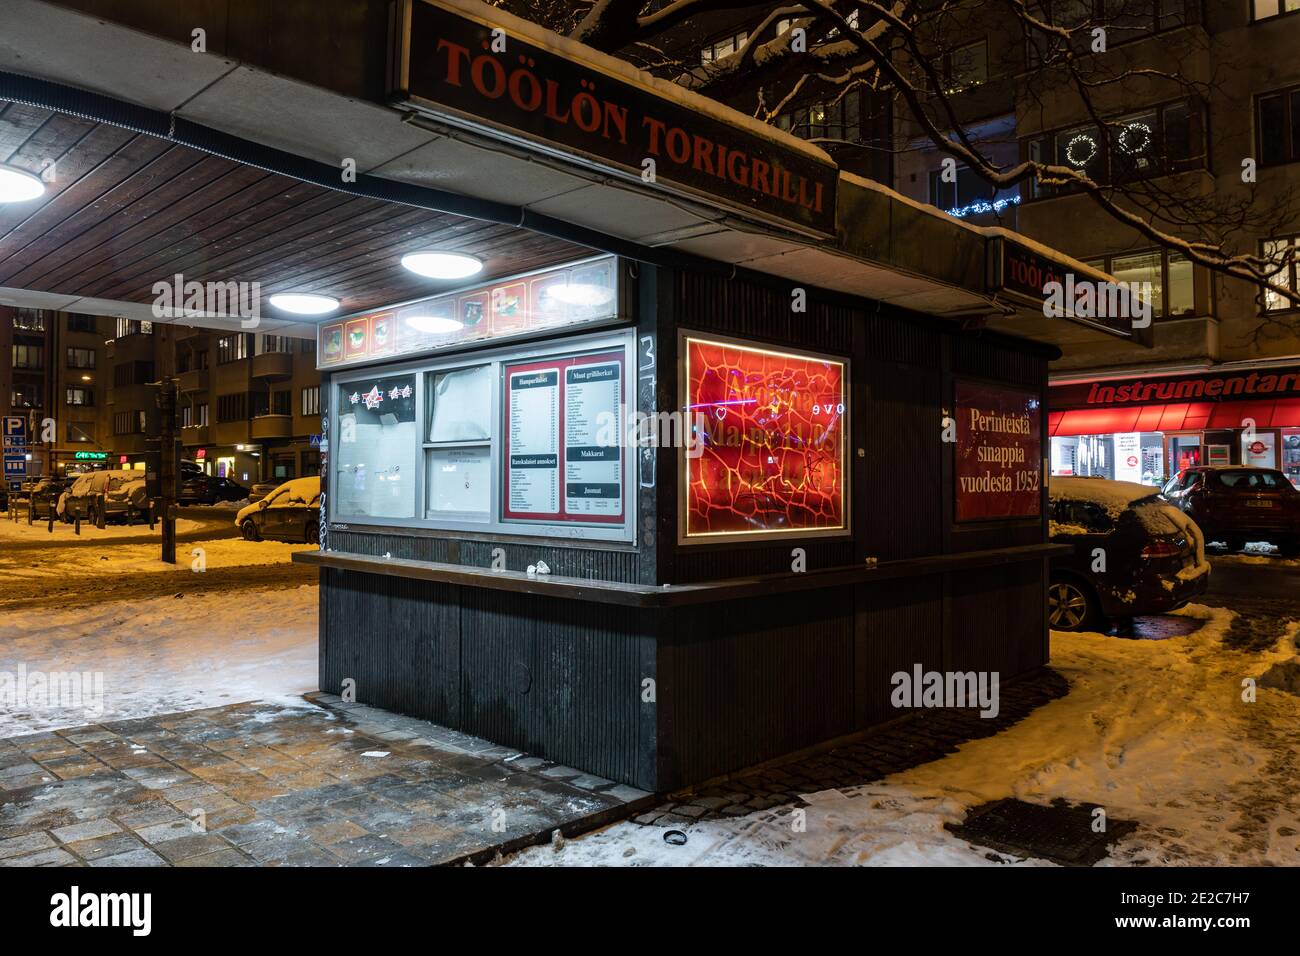 Töölön Torigrilli after dark. Iconic fast food kiosk  by Töölöntori Square in Helsinki, Finland Stock Photo